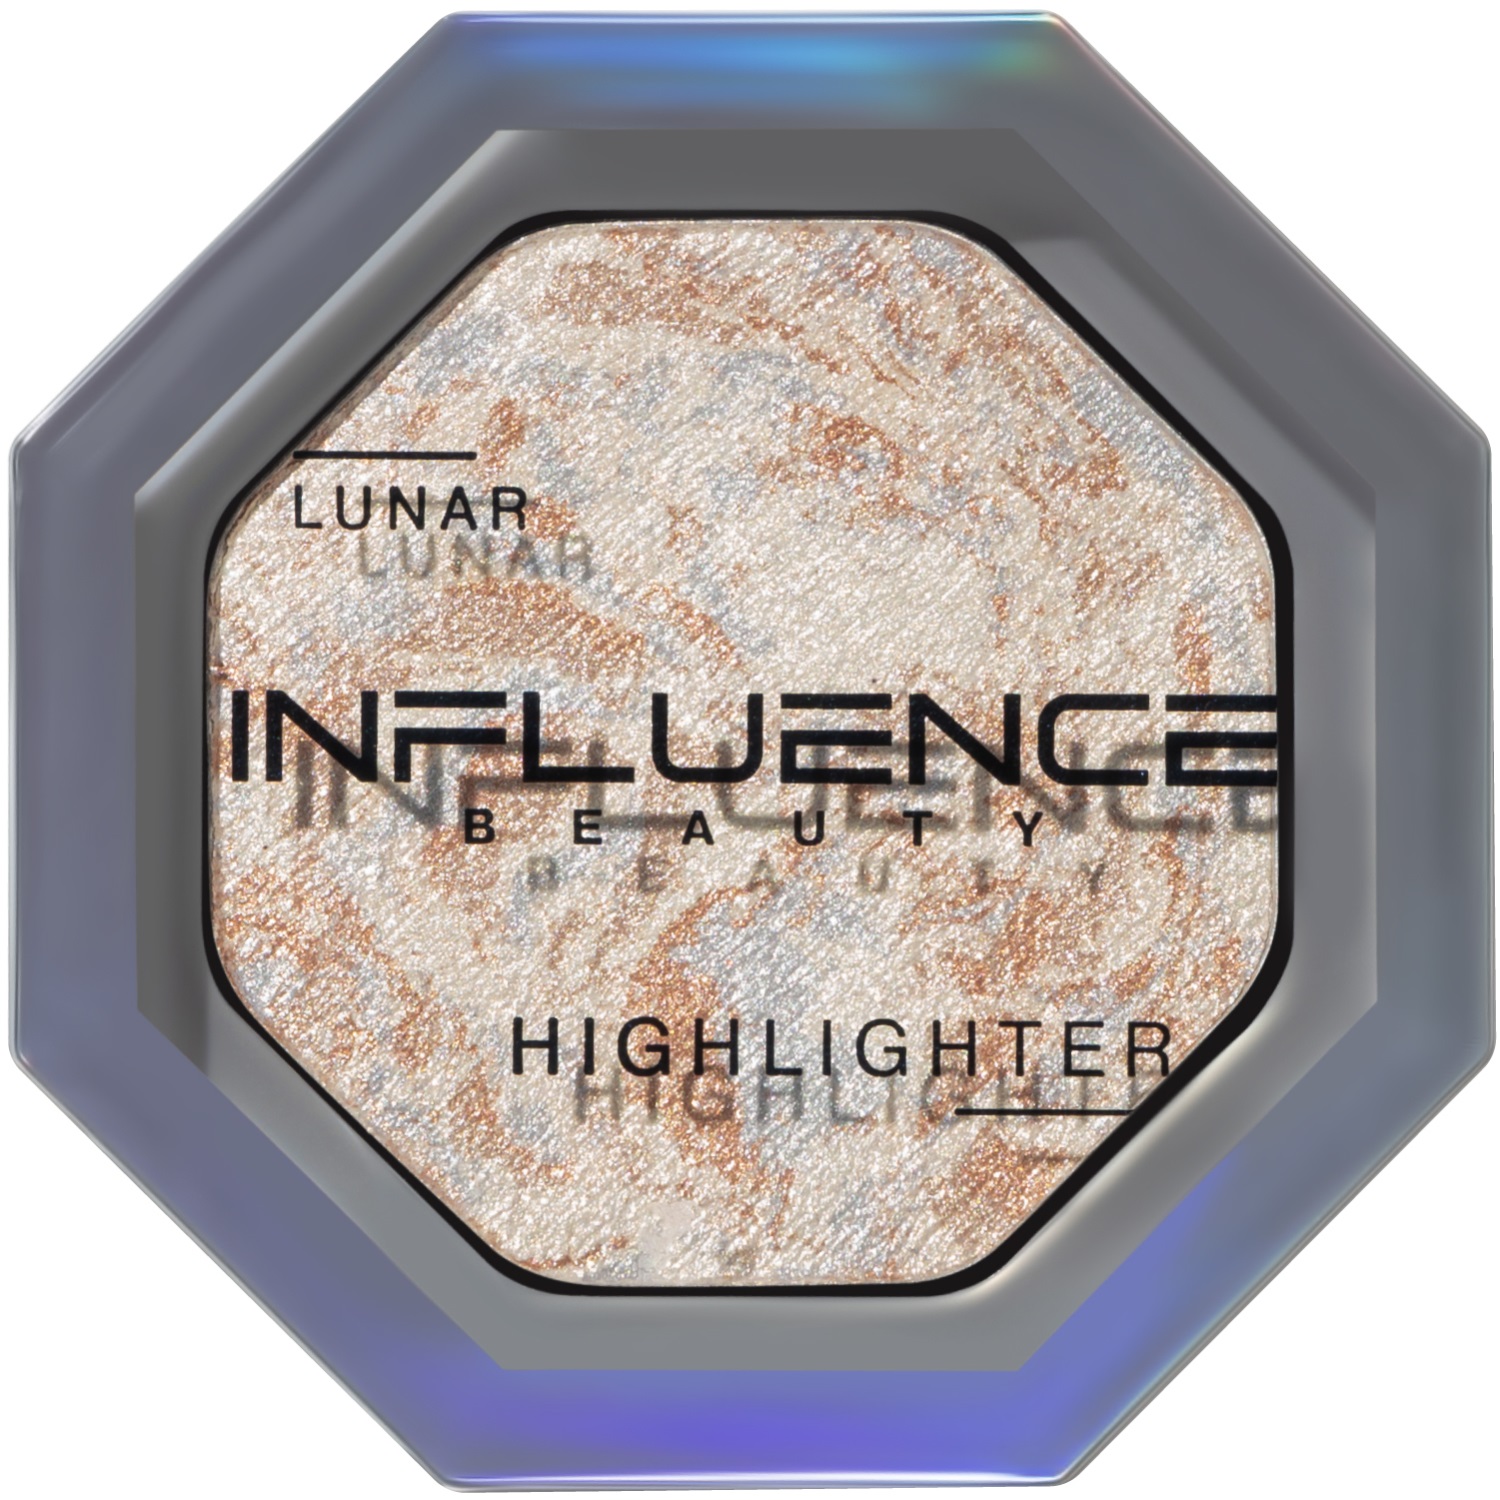 INFLUENCE beauty Хайлайтер Lunar с сияющими частицами, серебряный, 4,8 г (INFLUENCE beauty, Лицо) хайлайтер influence beauty lunar 4 8 г